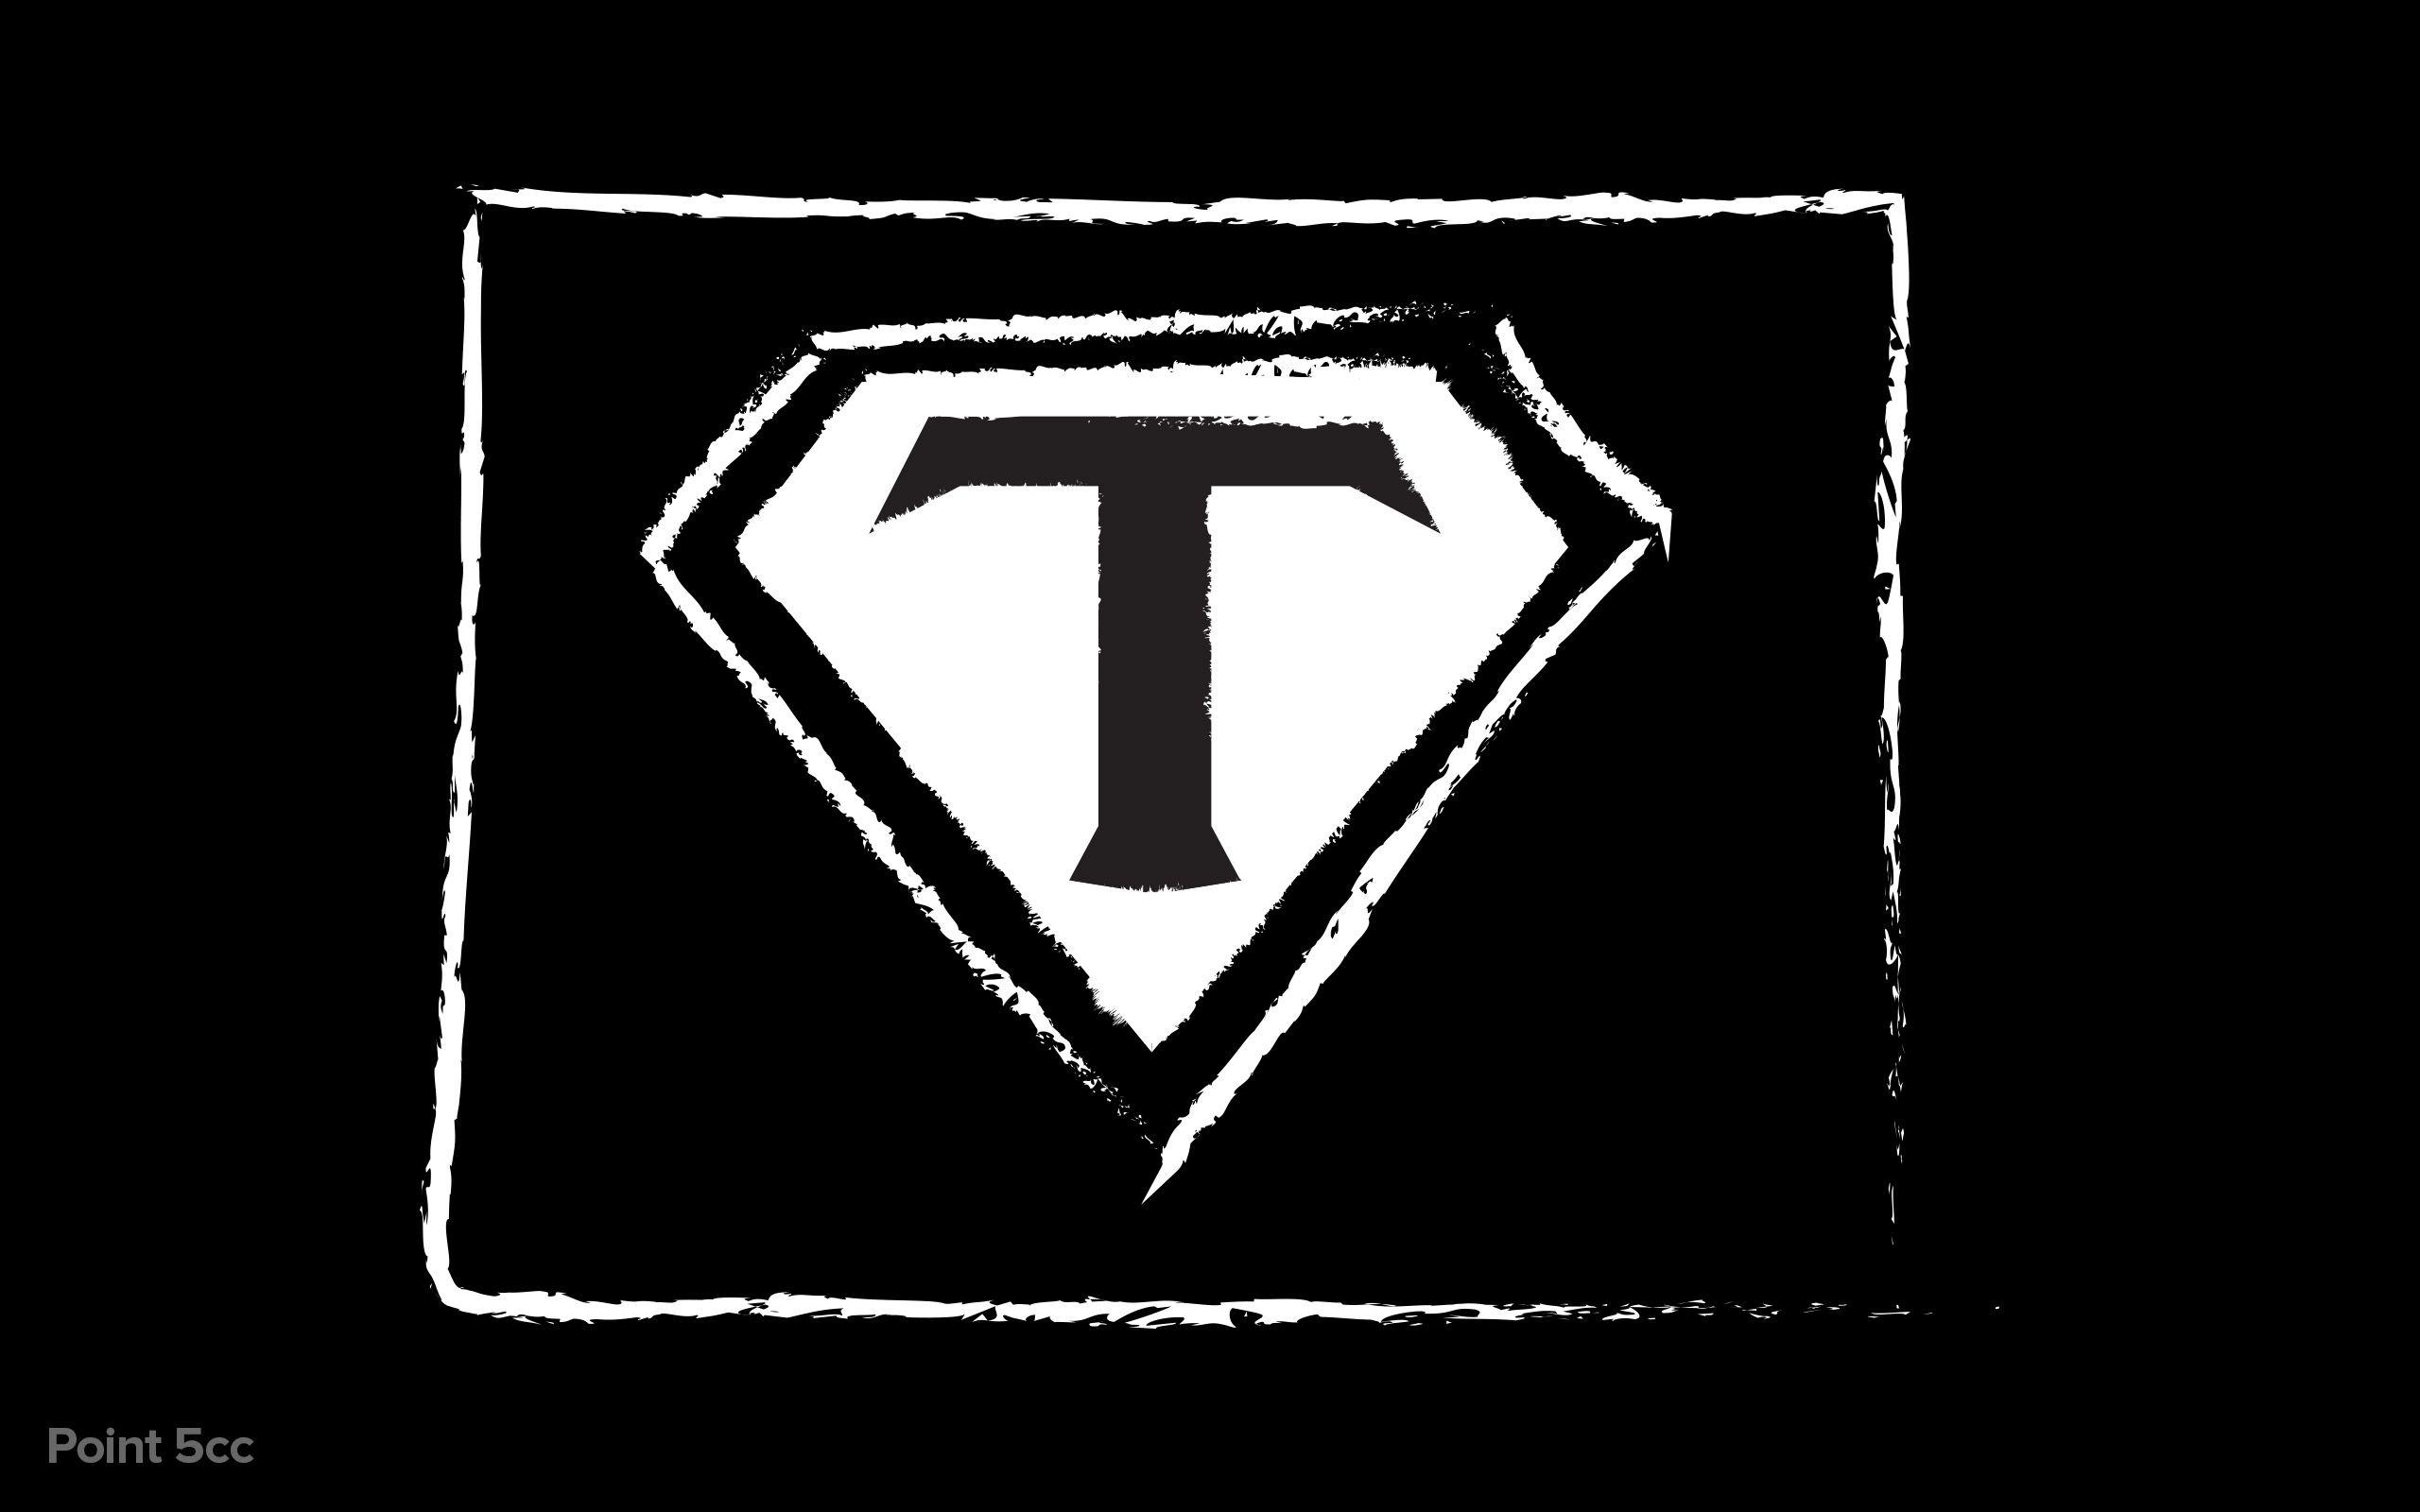 Super T Logo - Free Point 5cc Wallpaper Download | Point 5cc